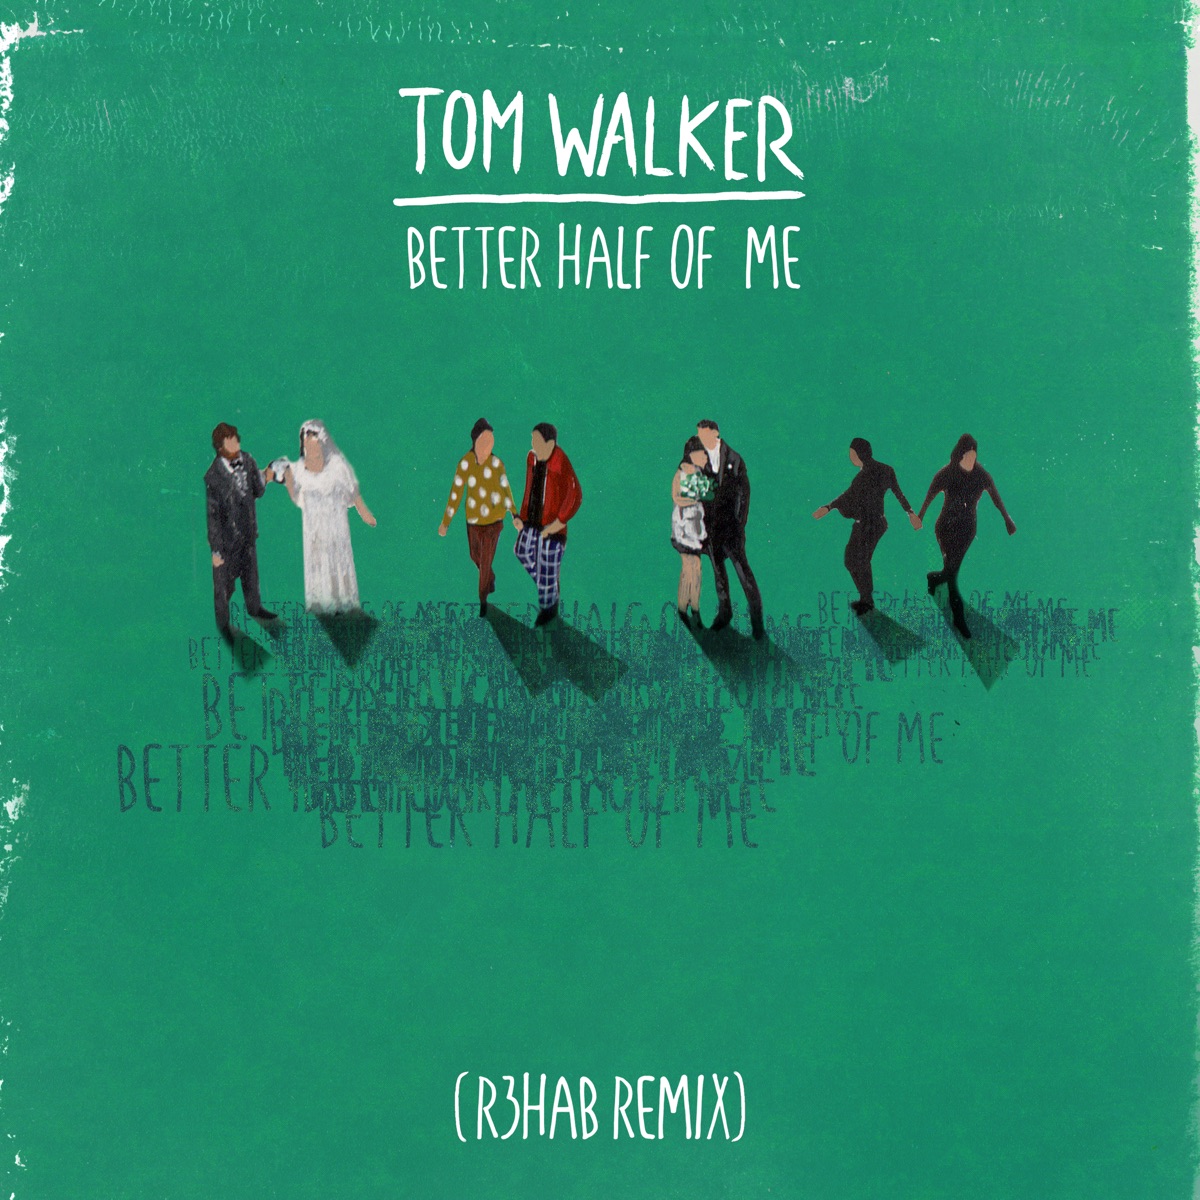 Better half of me. Year-just better обложка. Tom Walker OST. Better half. Обложка альбома Walker в Лондоне\\.